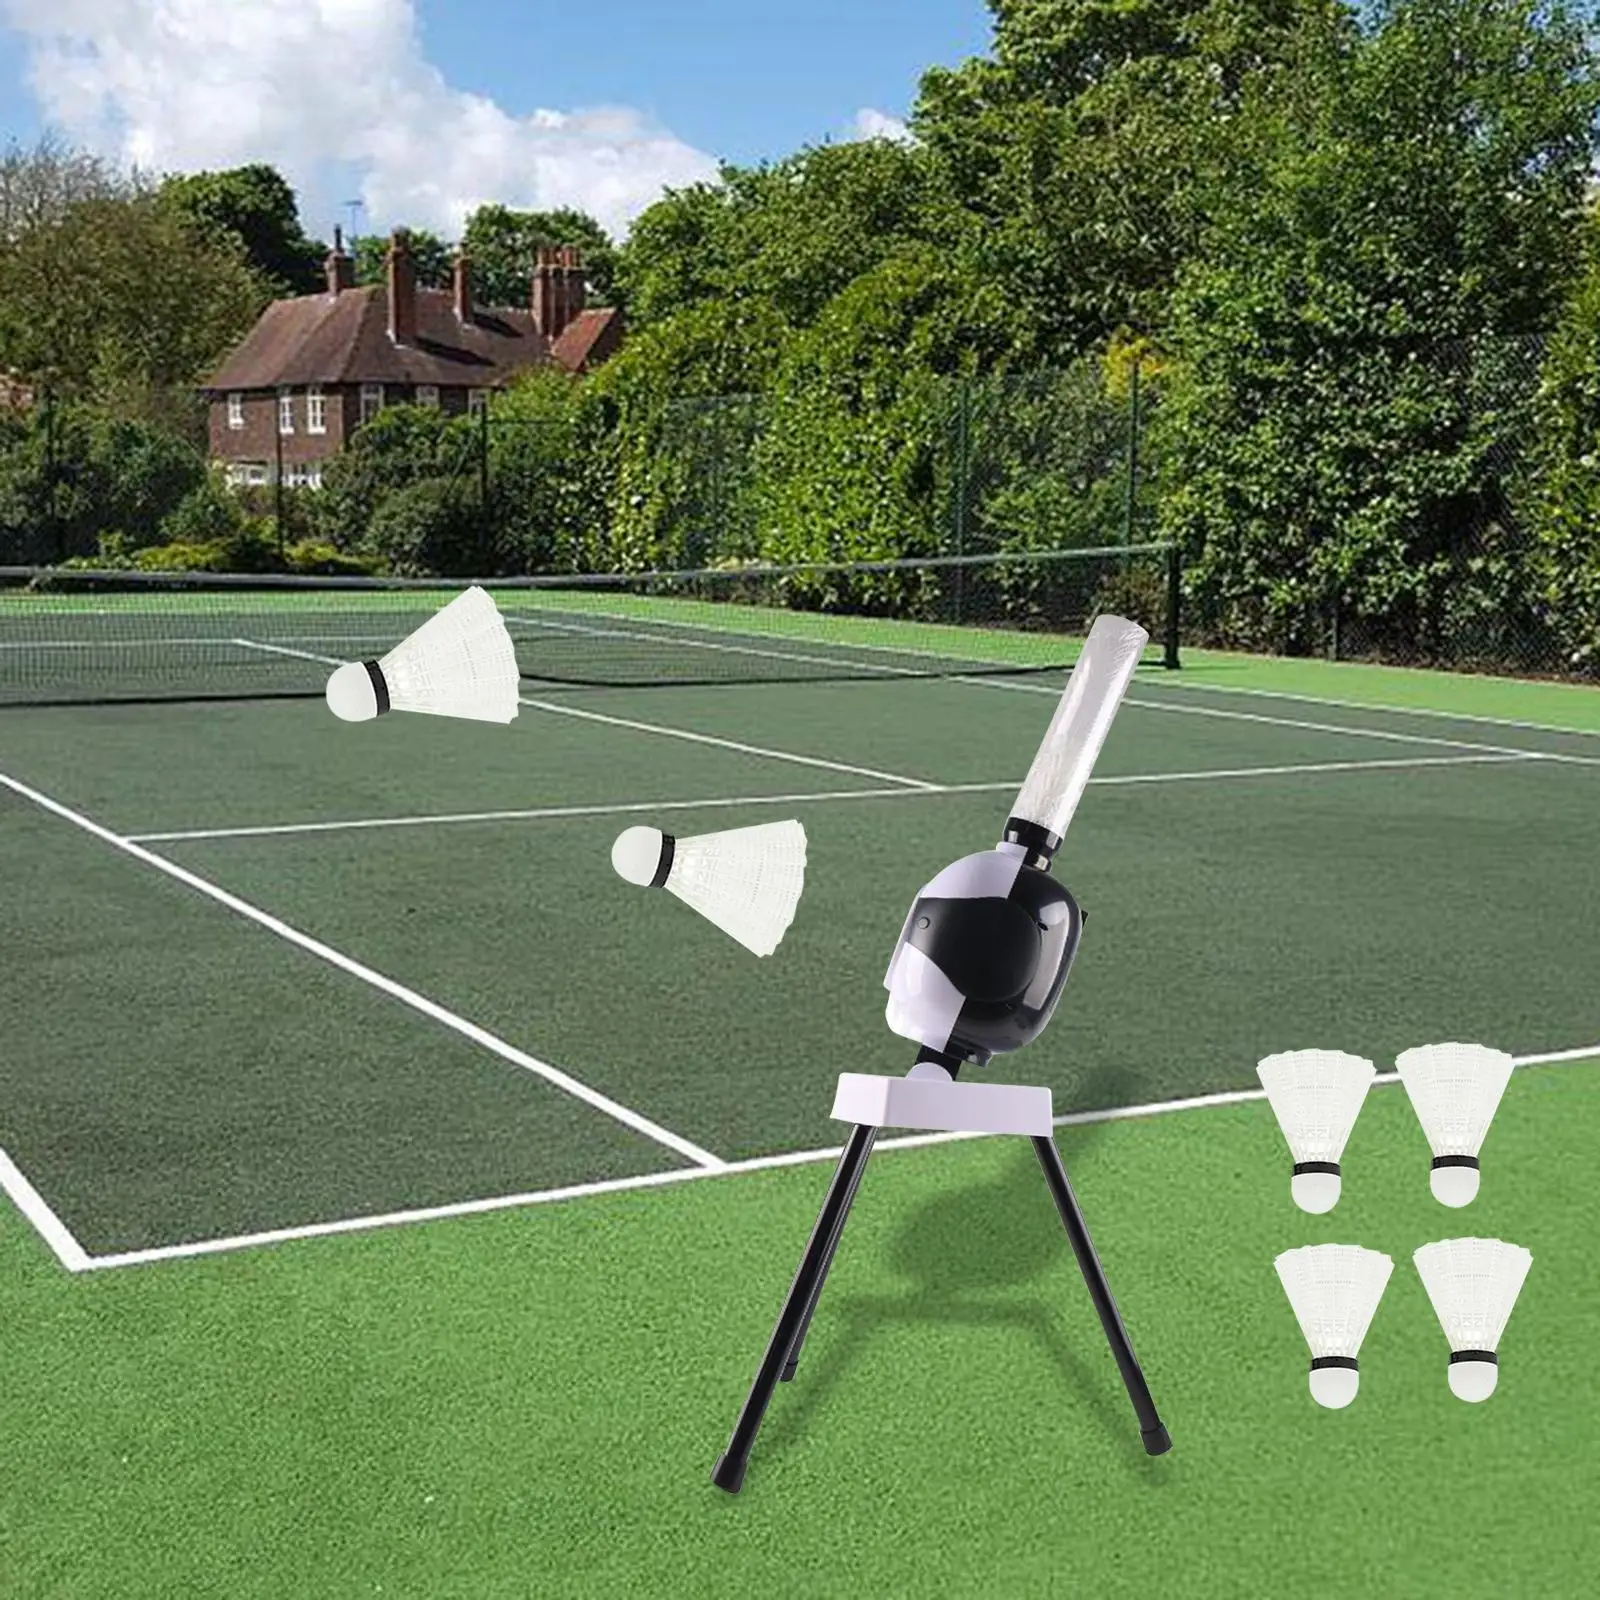 Automatic Badminton Serve Machine Badminton Ball Tosser Practice Portable